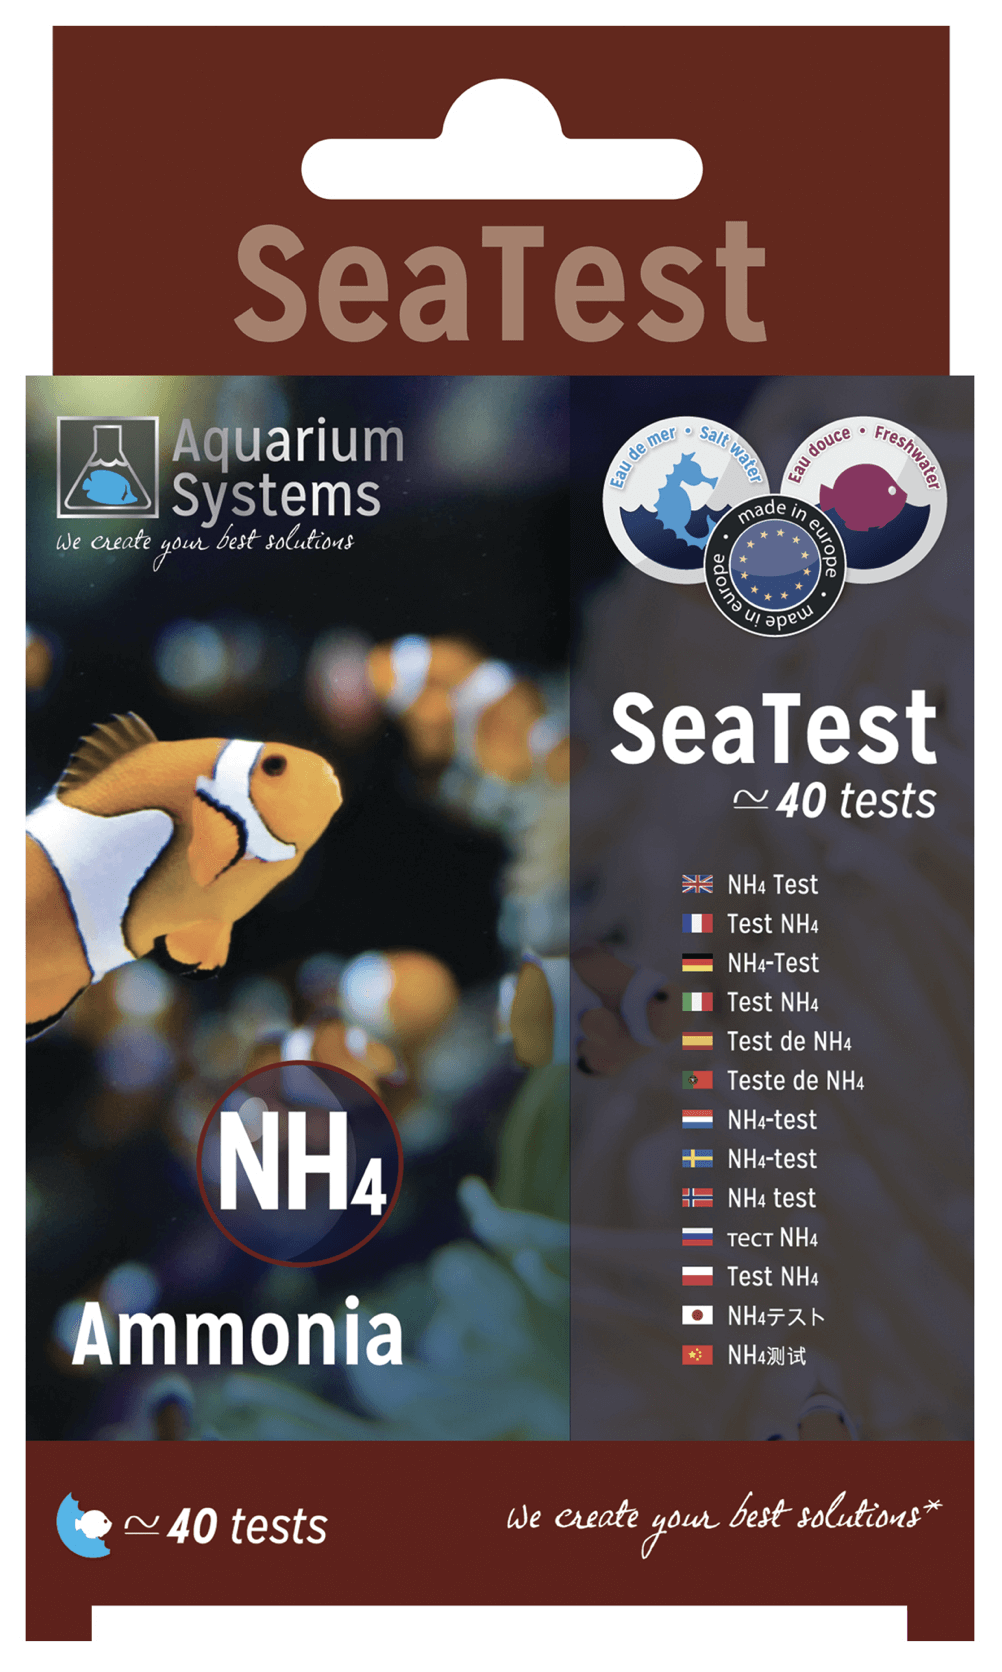 JBL - ProAquaTest NH4 - Test du taux d'ammonium et ammoniaque